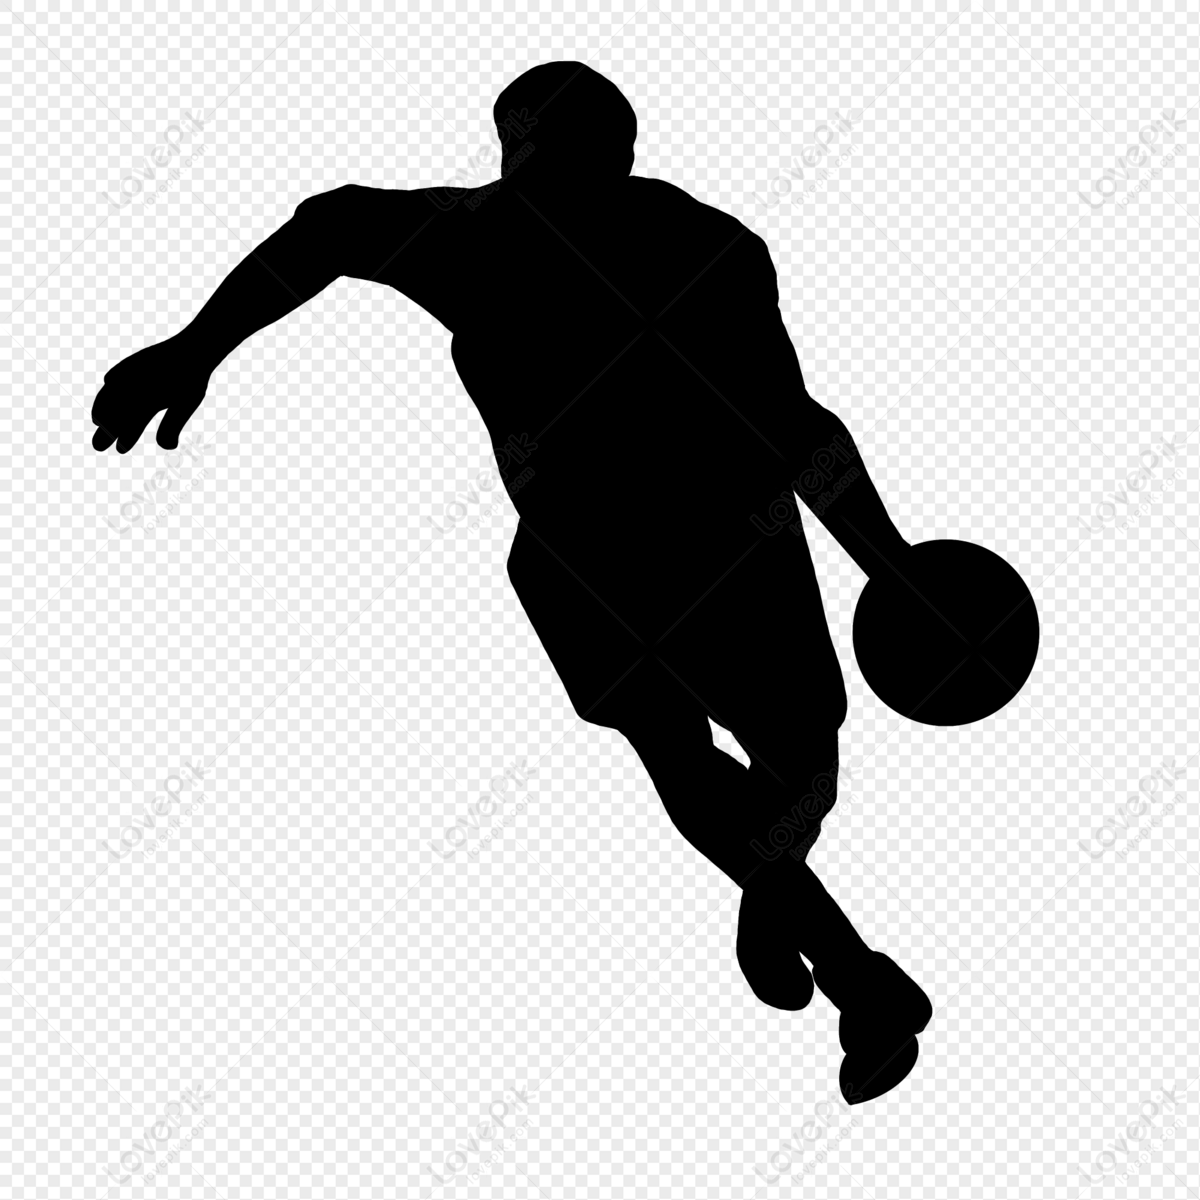 basketball player silhouette dribbling